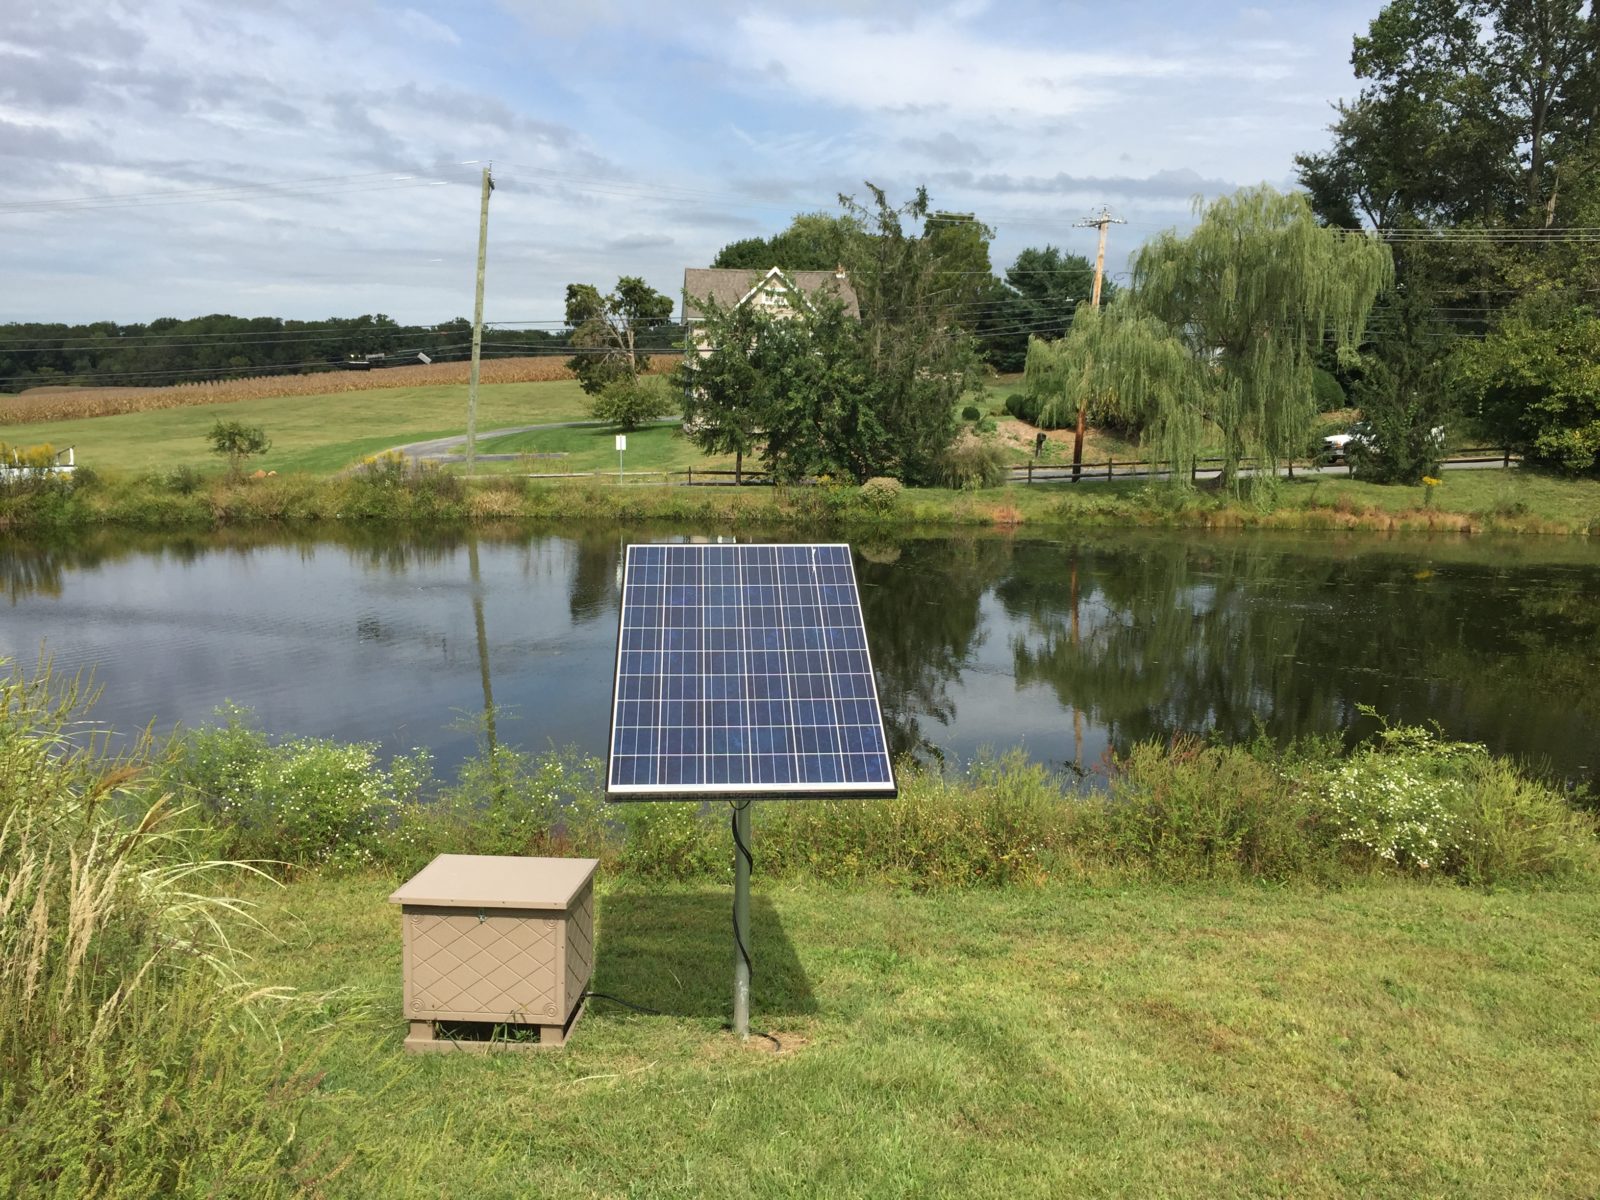 Hitchens Farm Pond_Solar Aeration_Hockessin DE_JohnP_09.15